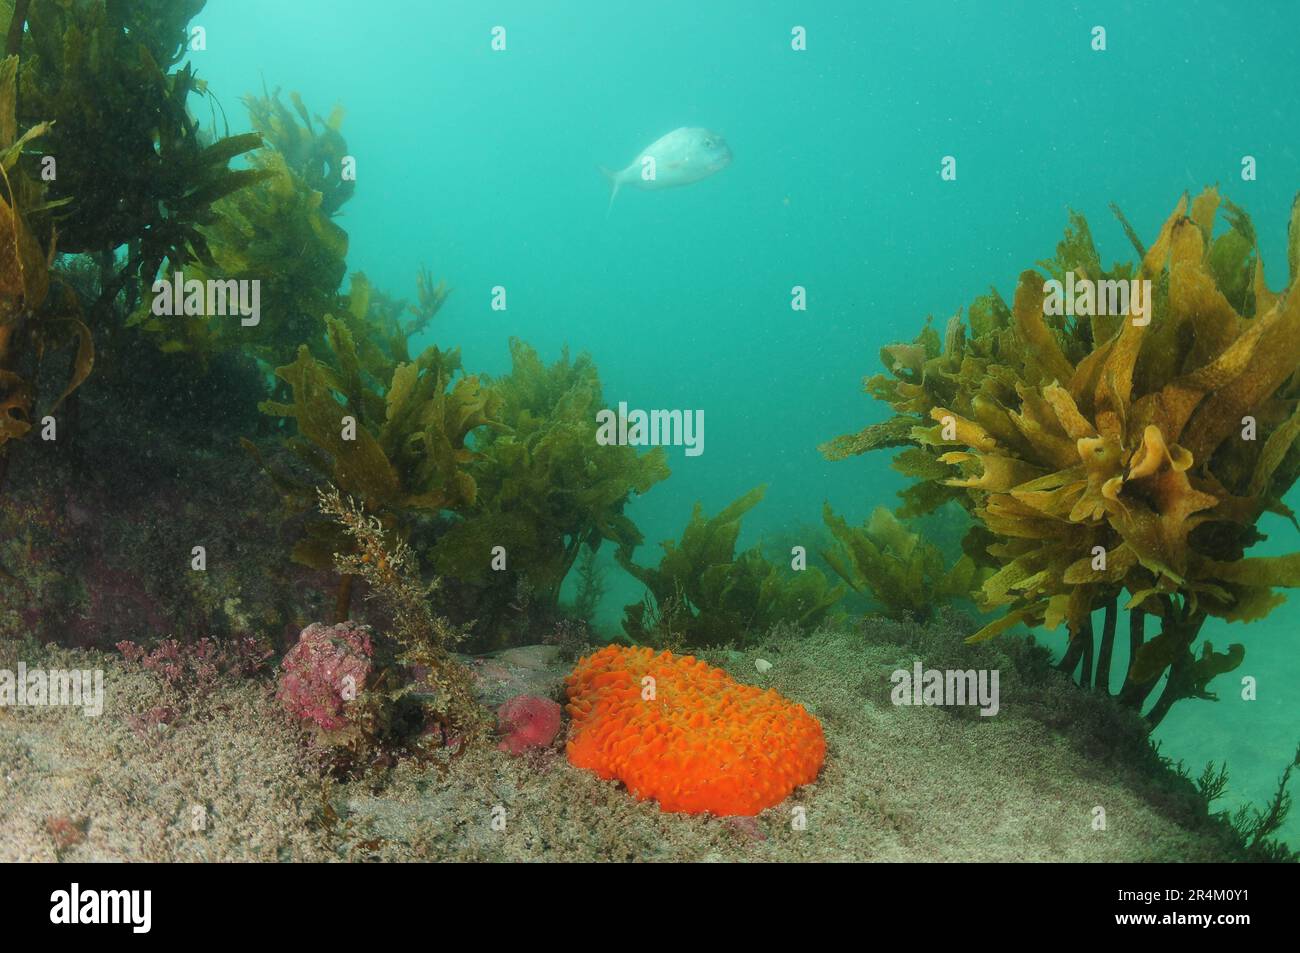 Bright orange nipple sponge on rocky bottom among brown seaweeds. Location: Leigh New Zealand Stock Photo